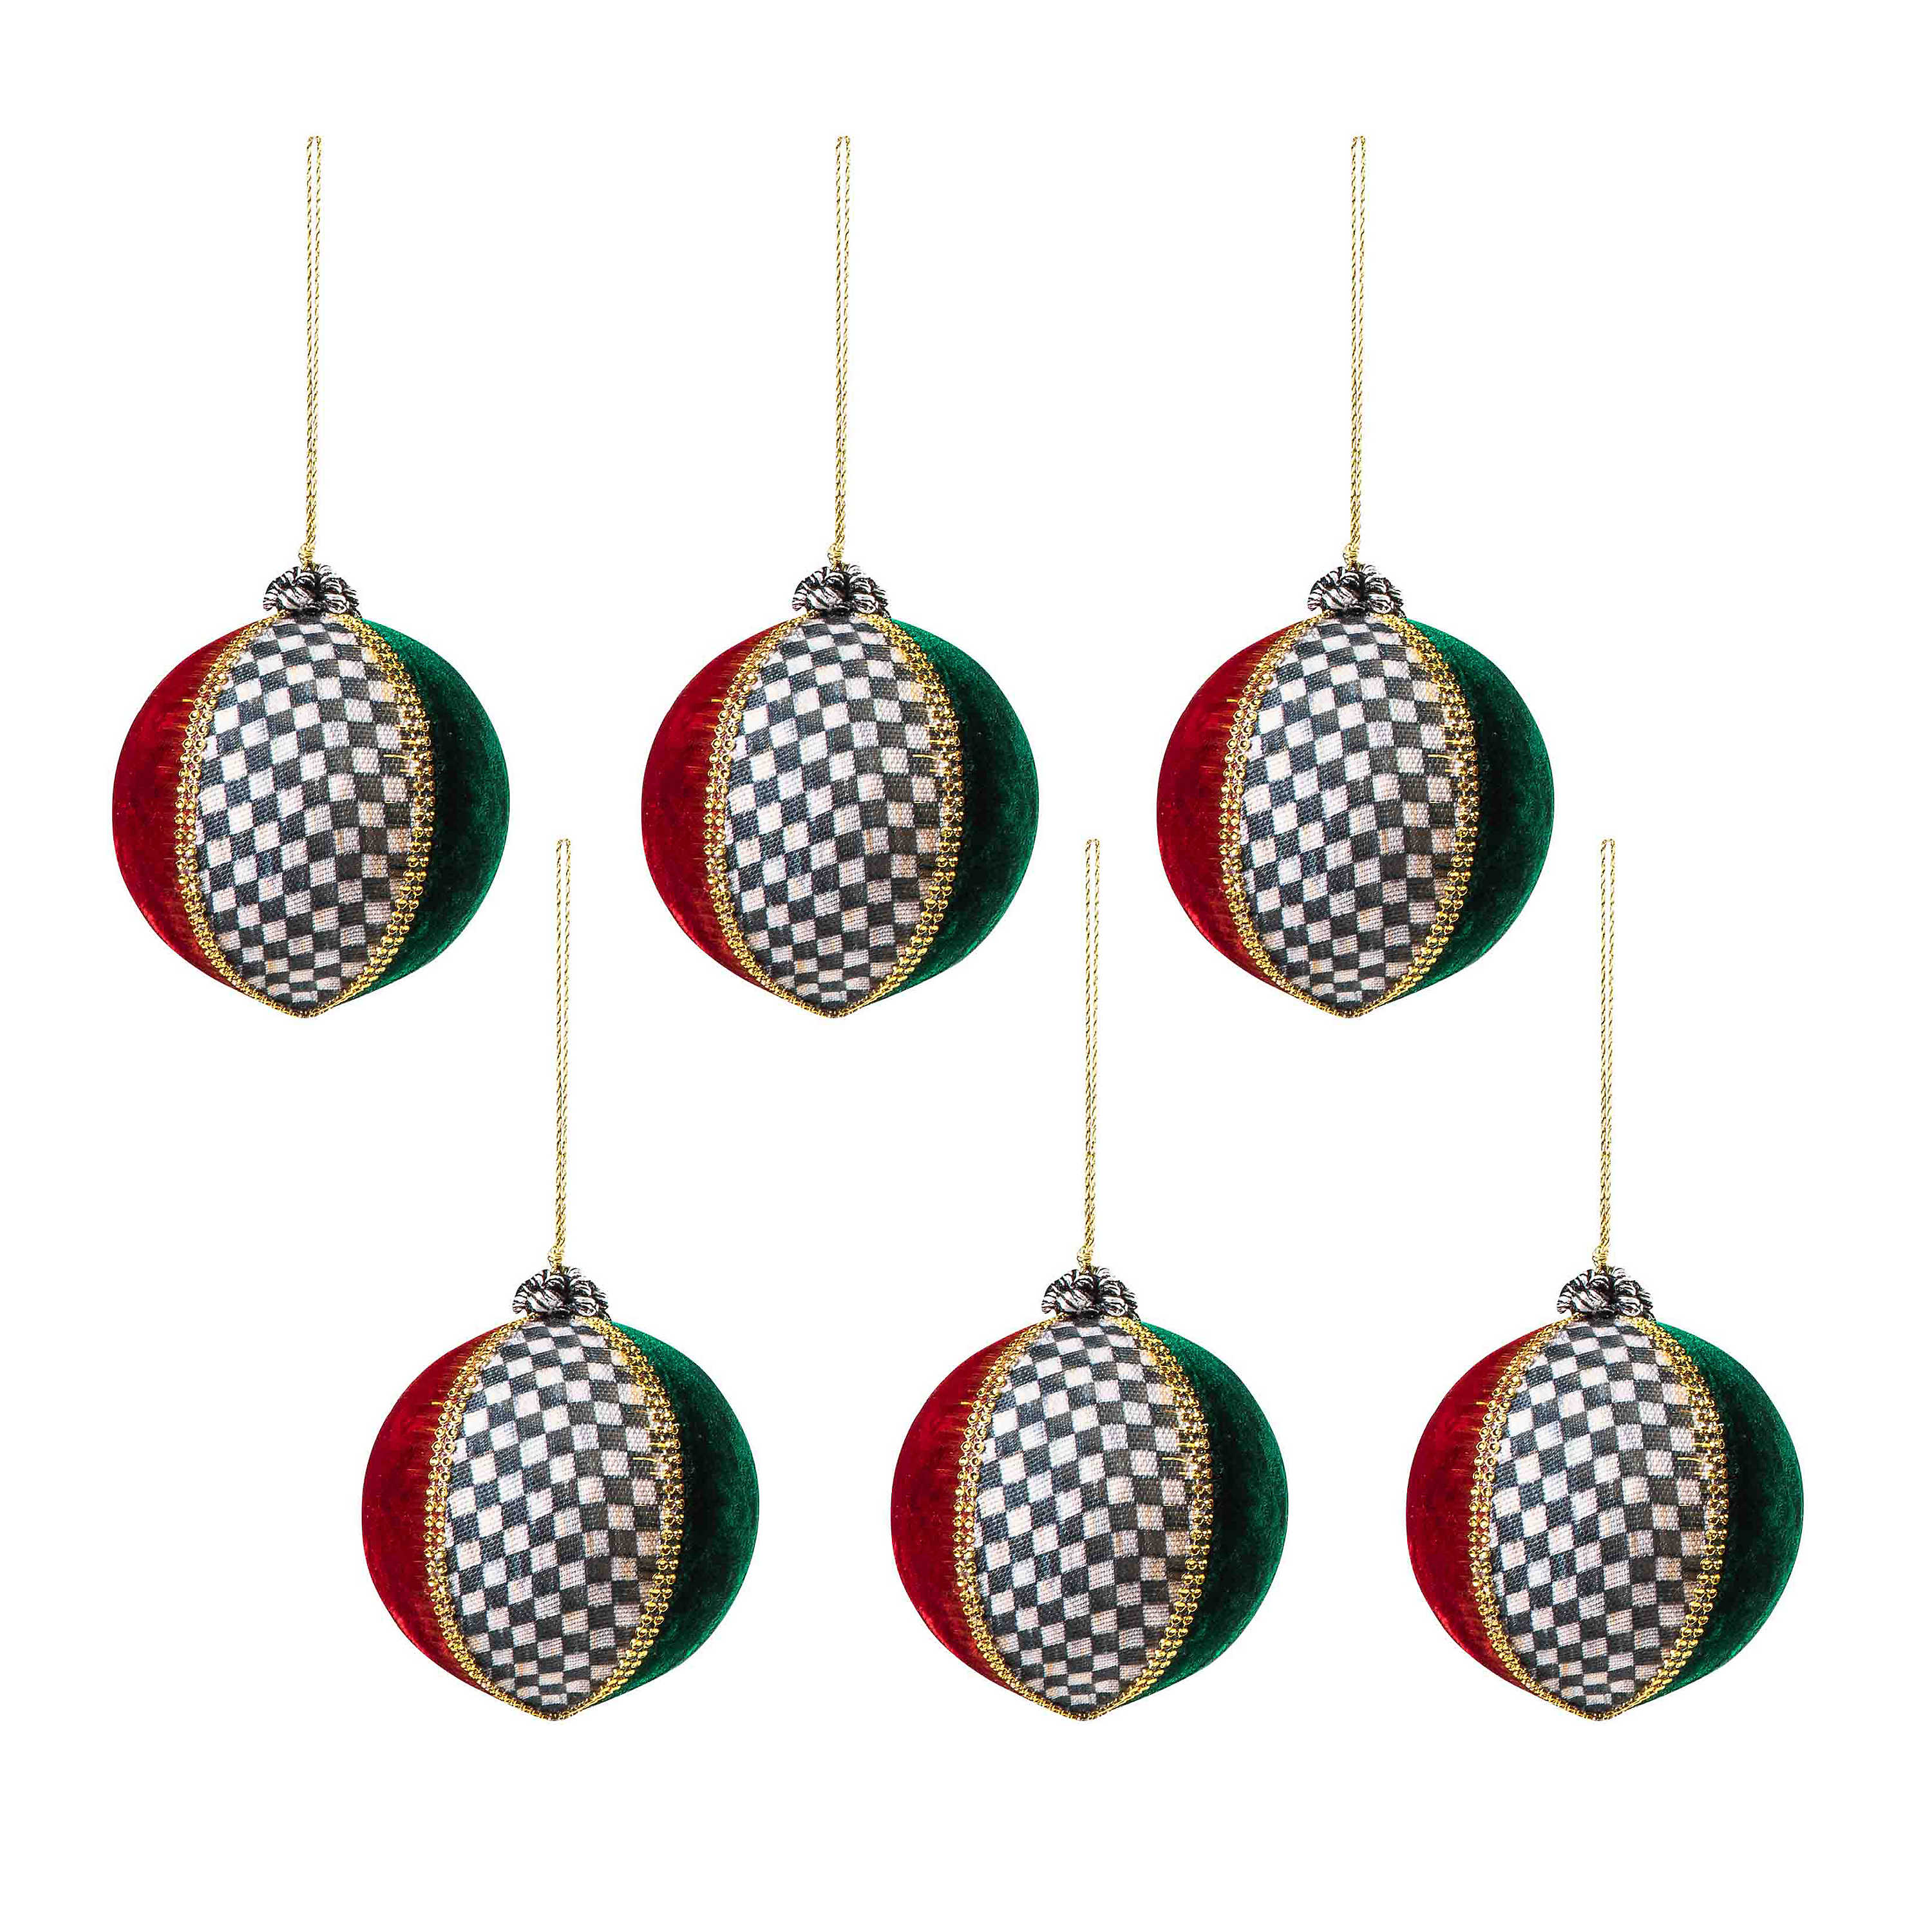 Velvet Patchwork Small Ball Ornaments, Set of 6 mackenzie-childs Panama 0